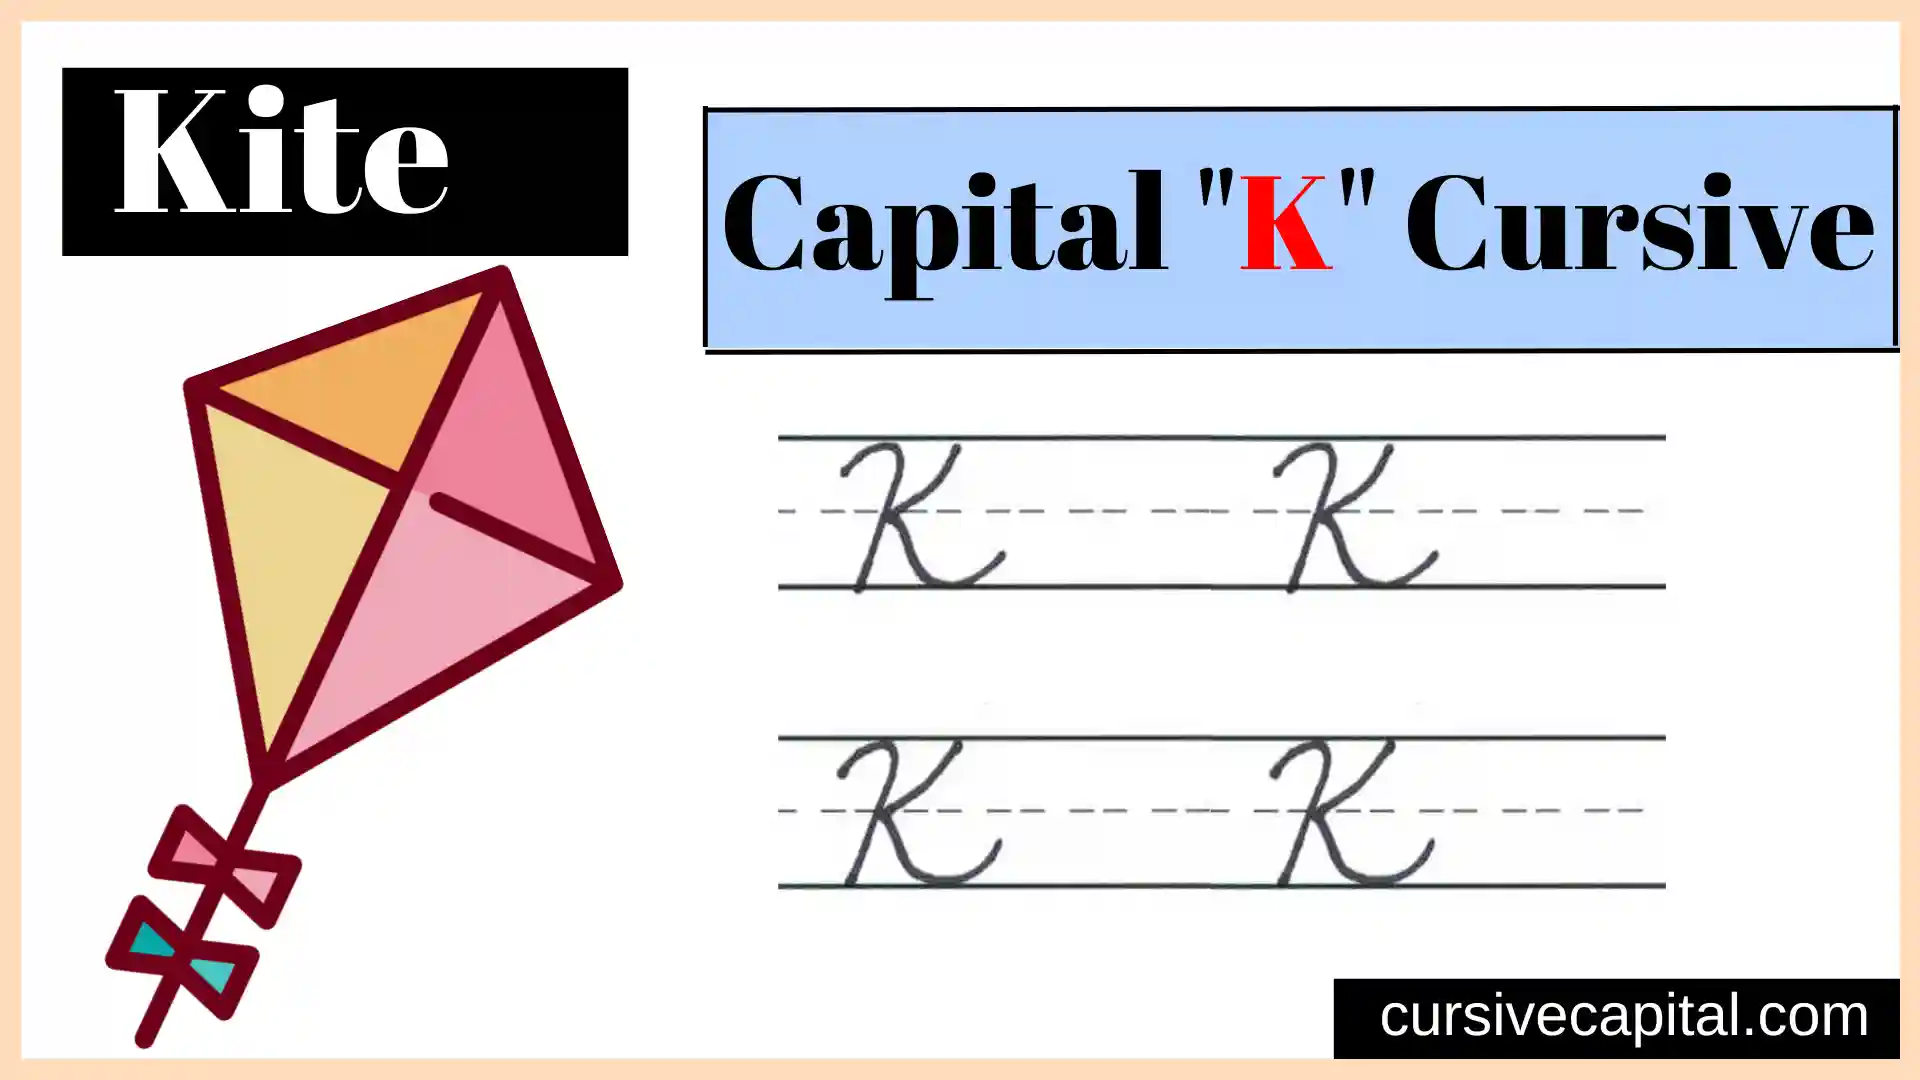 Capital K cursive